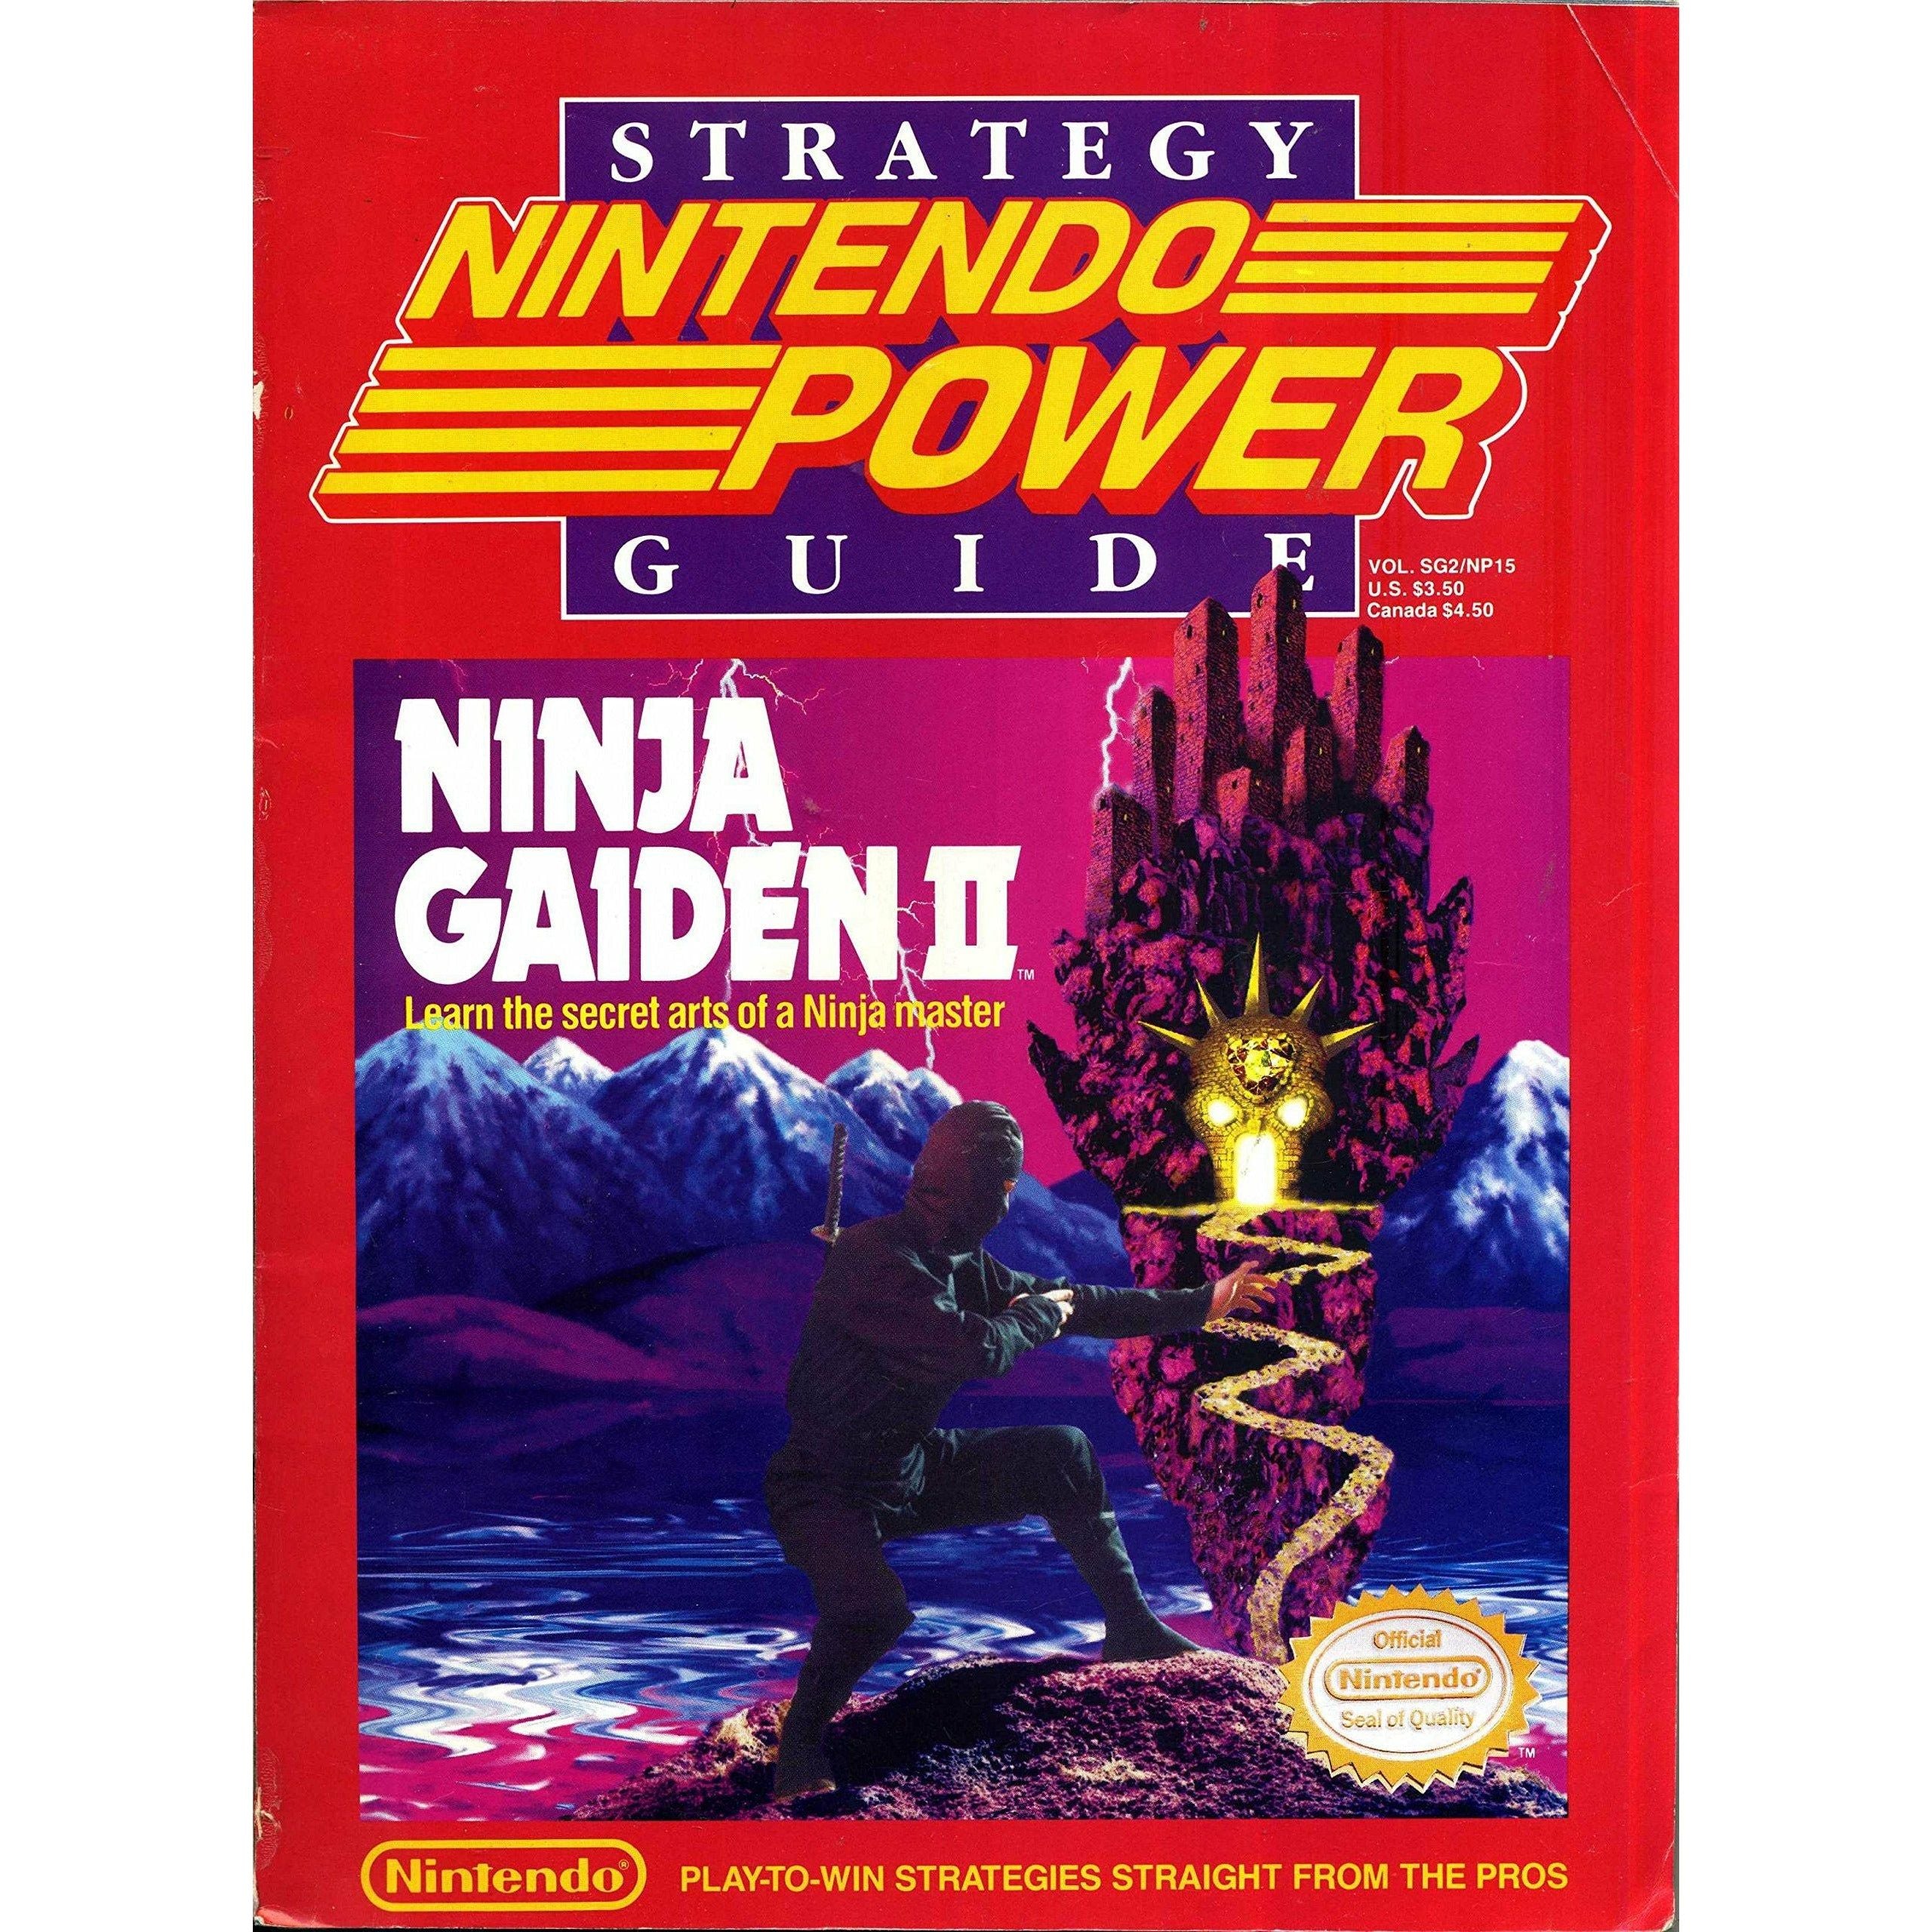 Guide de stratégie de puissance Nintendo - Ninja Gaiden II